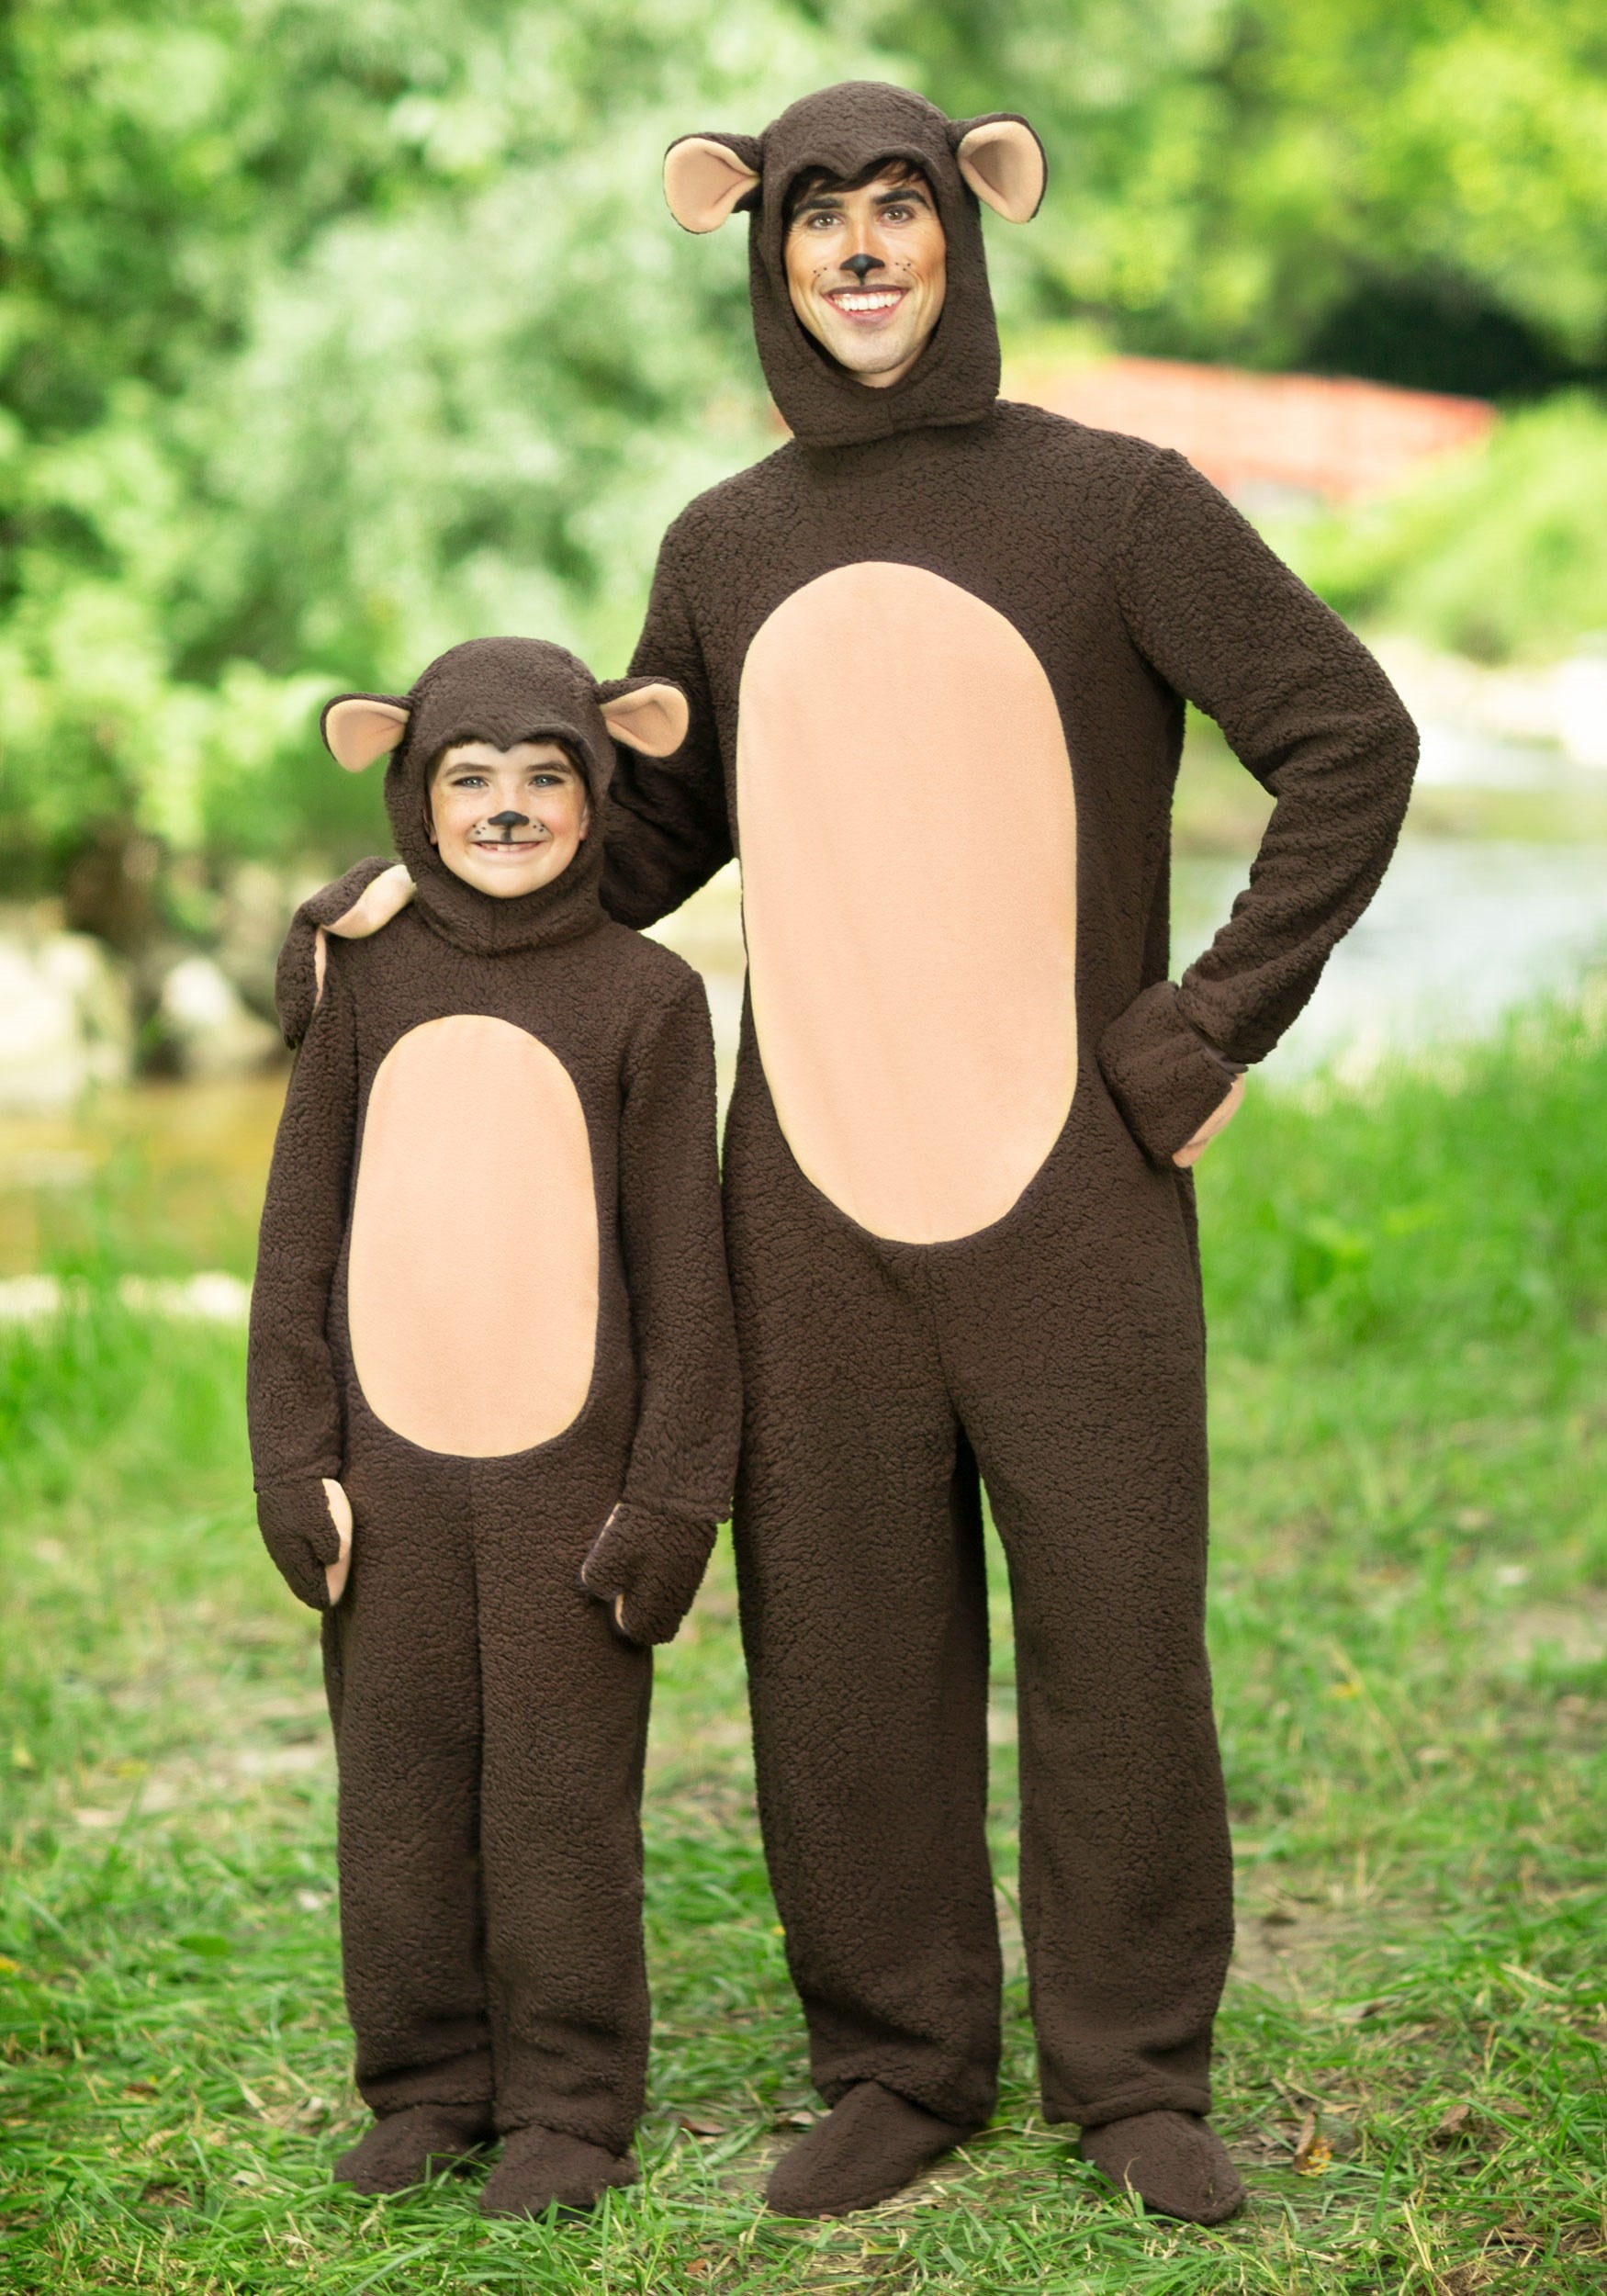 Adult Bear Costume